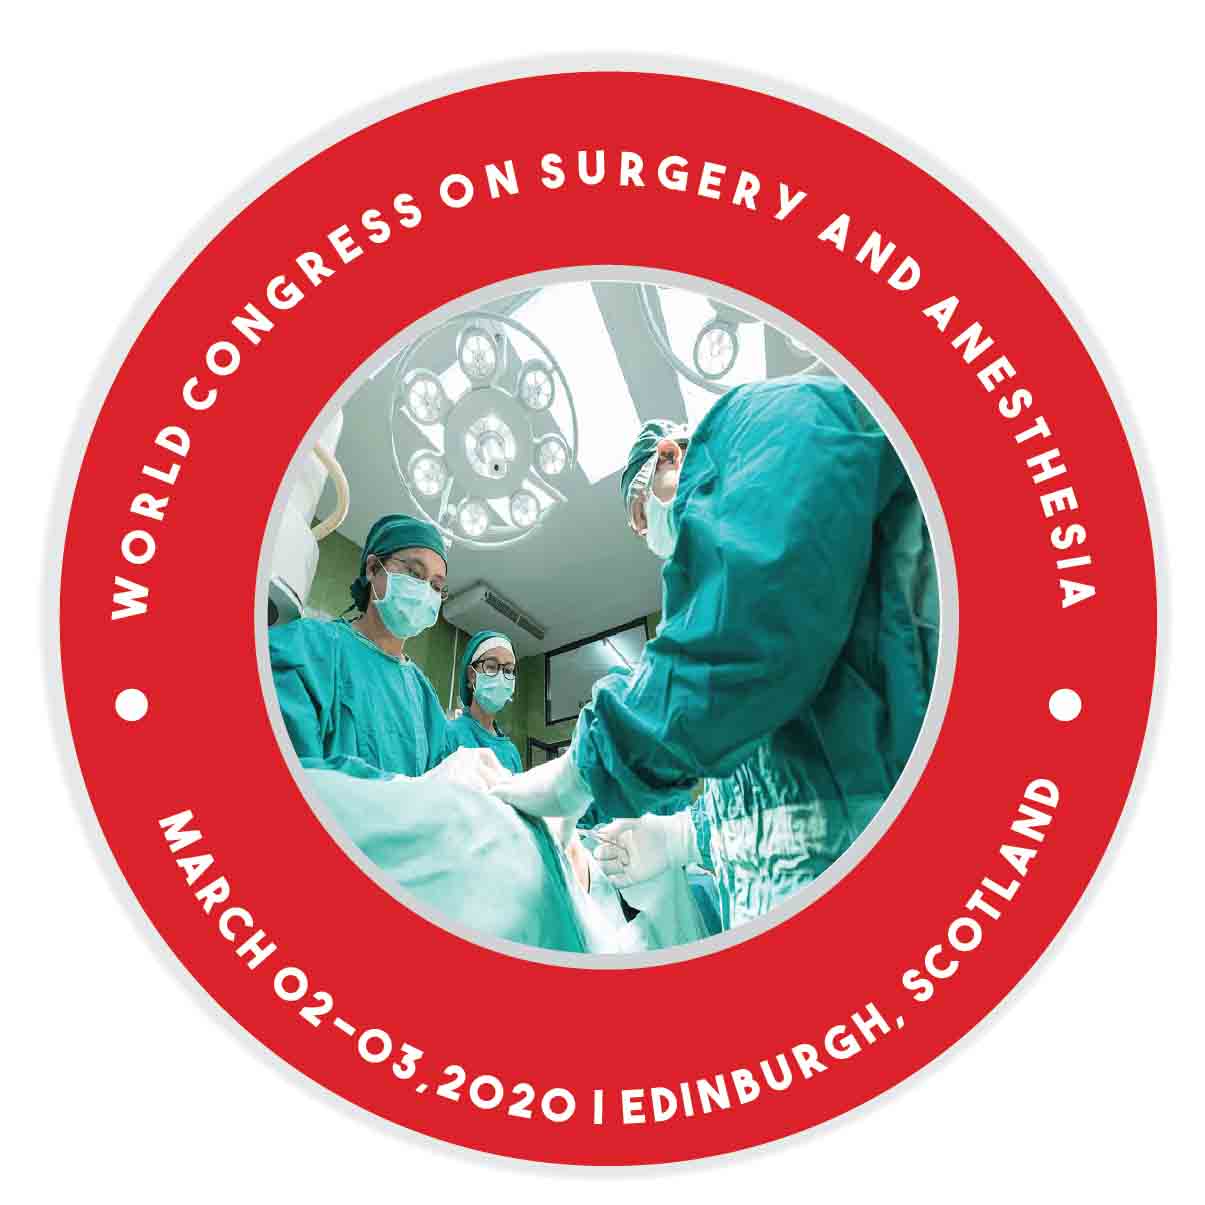 World Congress on Surgery and Anaesthesia, Edinburgh, Scotland, United Kingdom